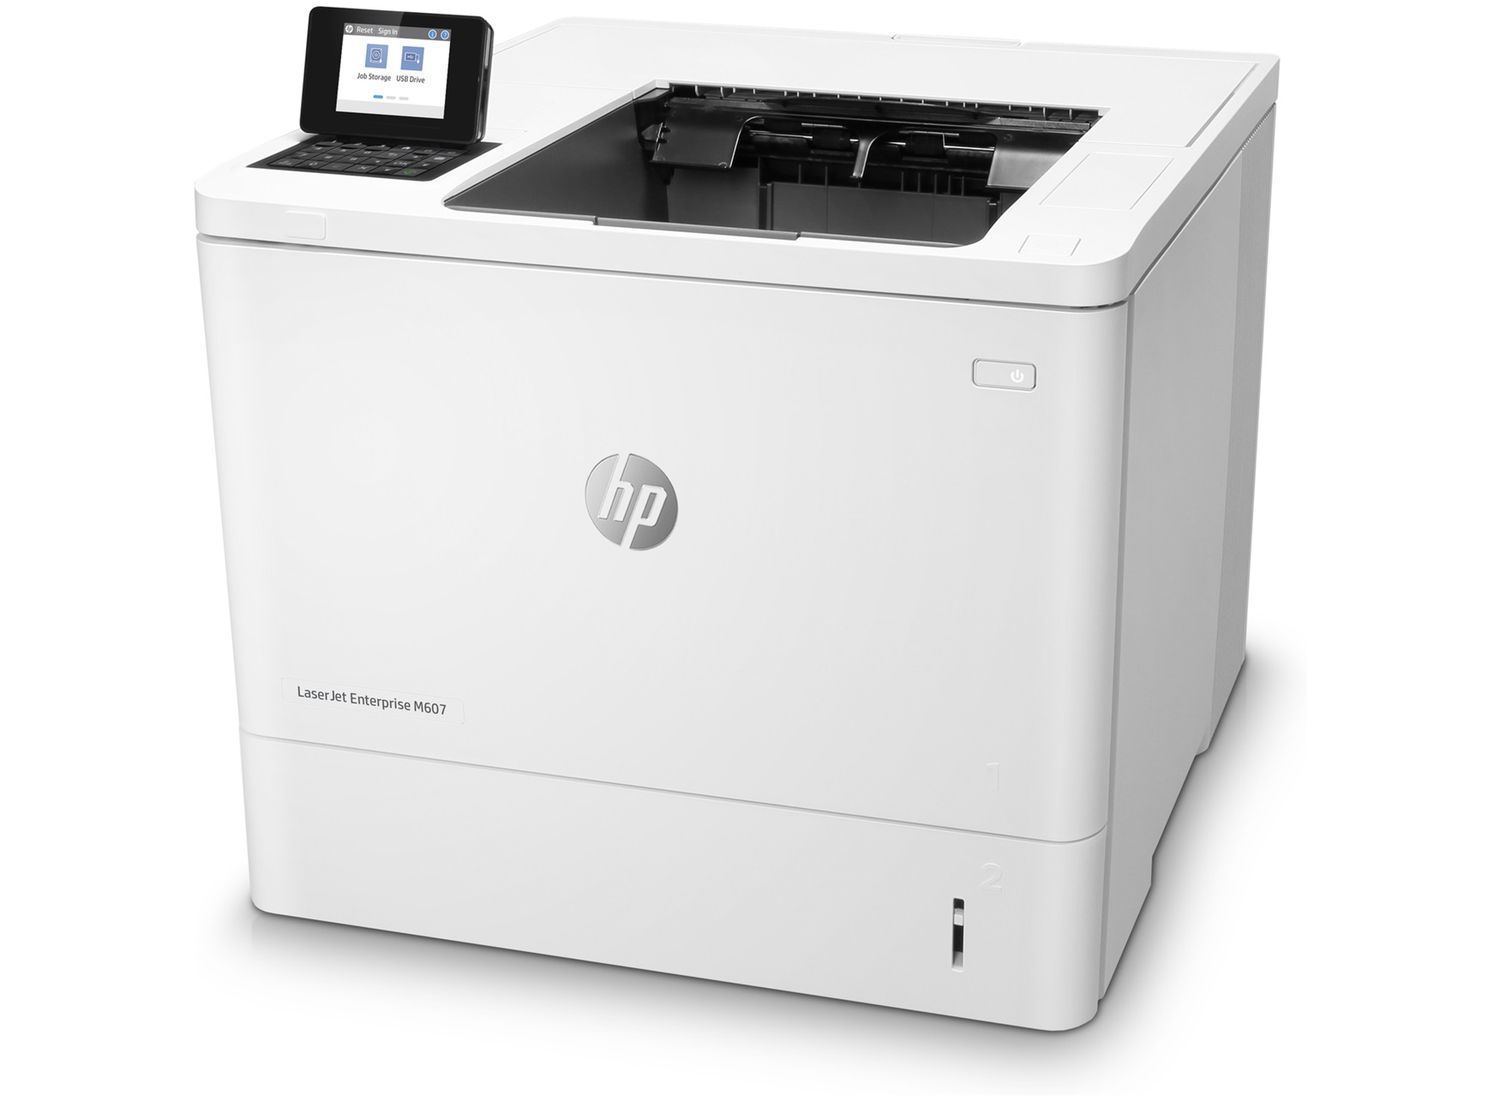 Принтер HP LaserJet Enterprise 600 M607n, цвет черный K0Q14A - фото 1